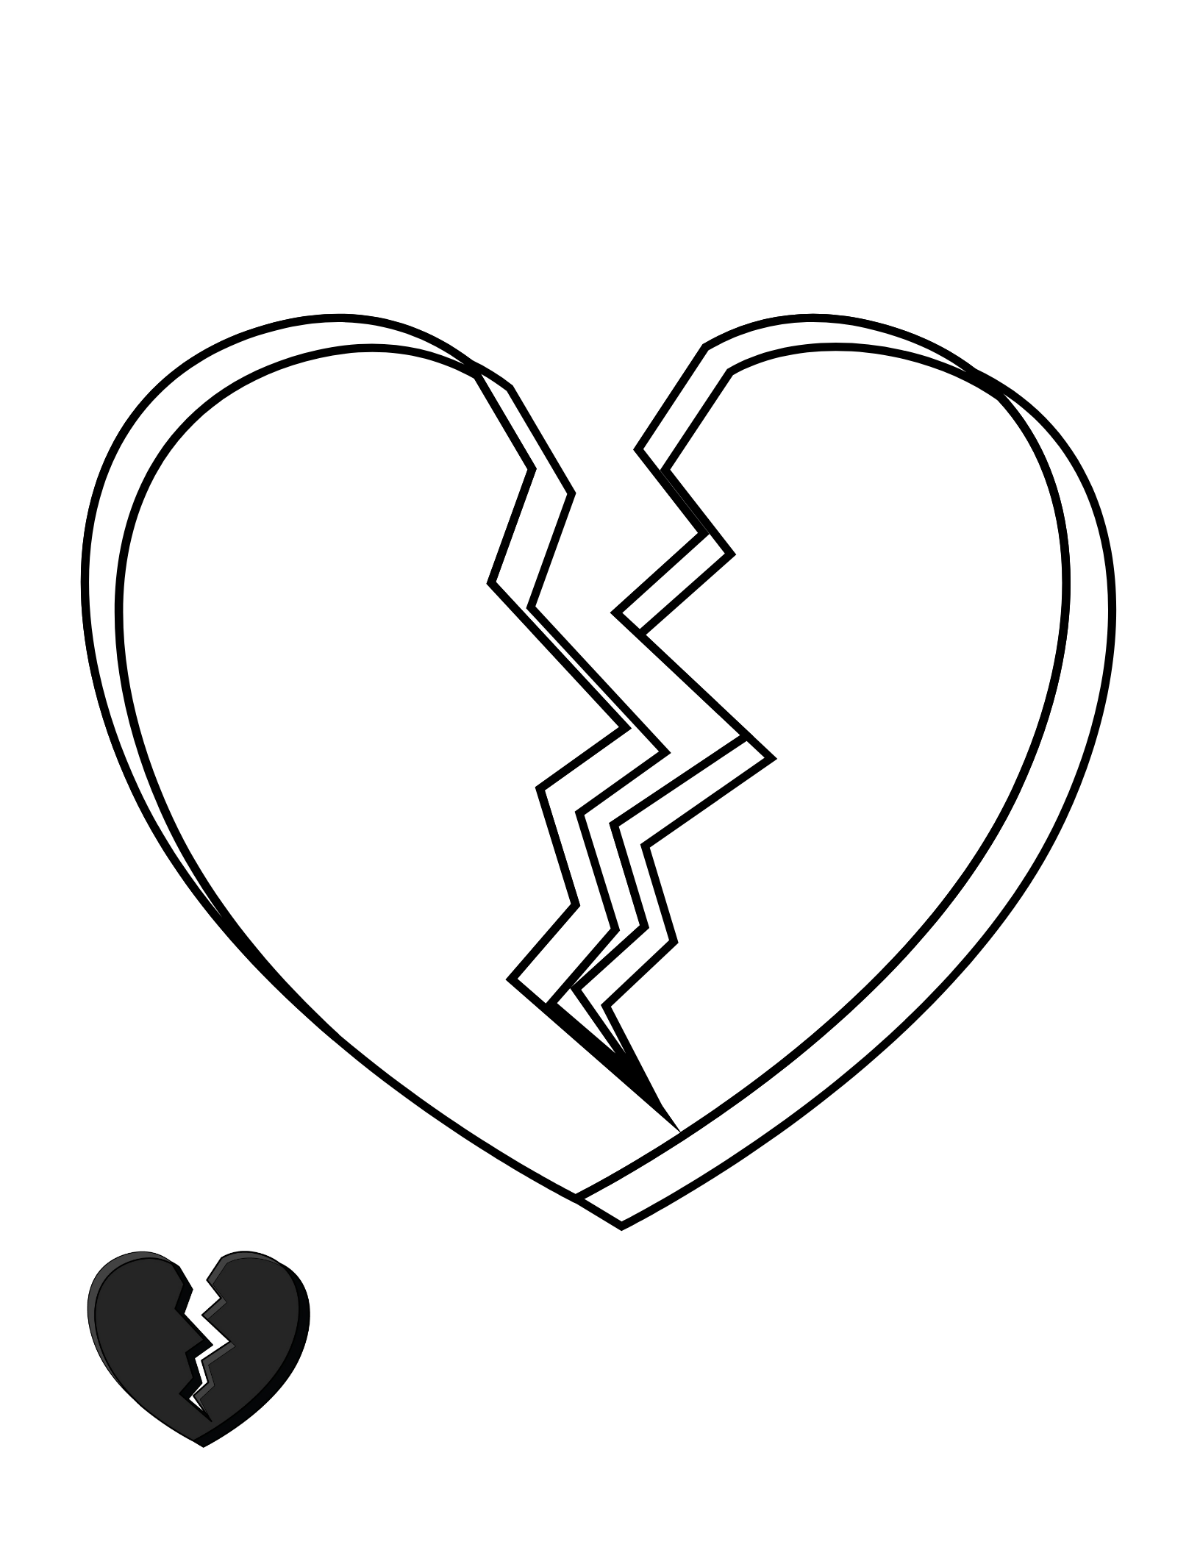 Black Broken Heart Coloring Page Template